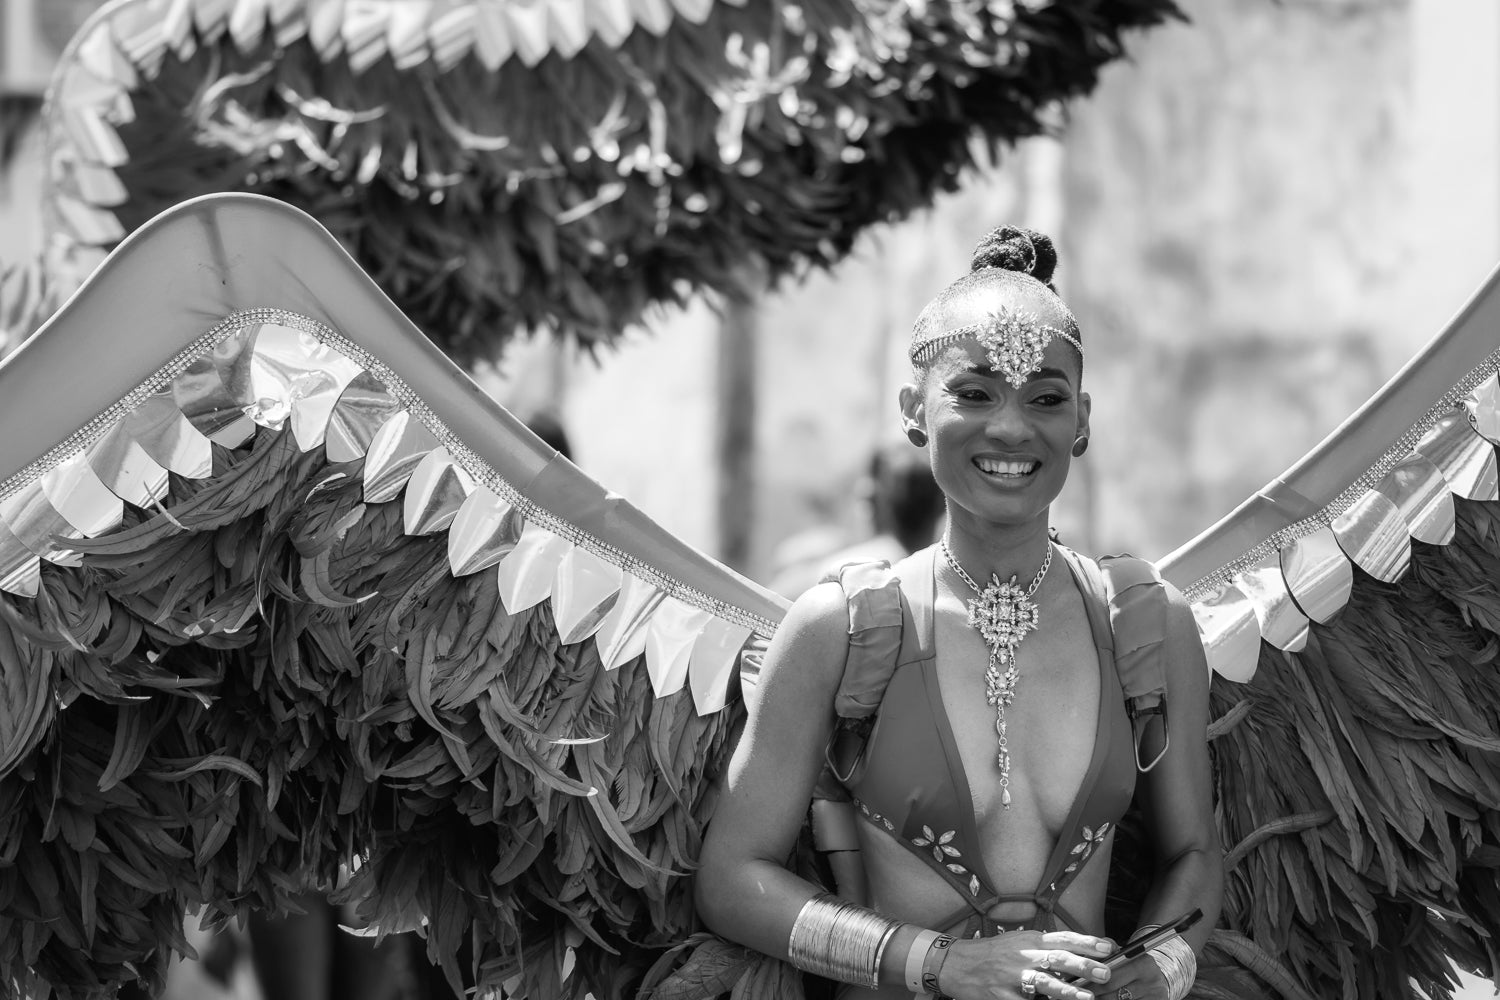 Capturing Carnival in monochrome